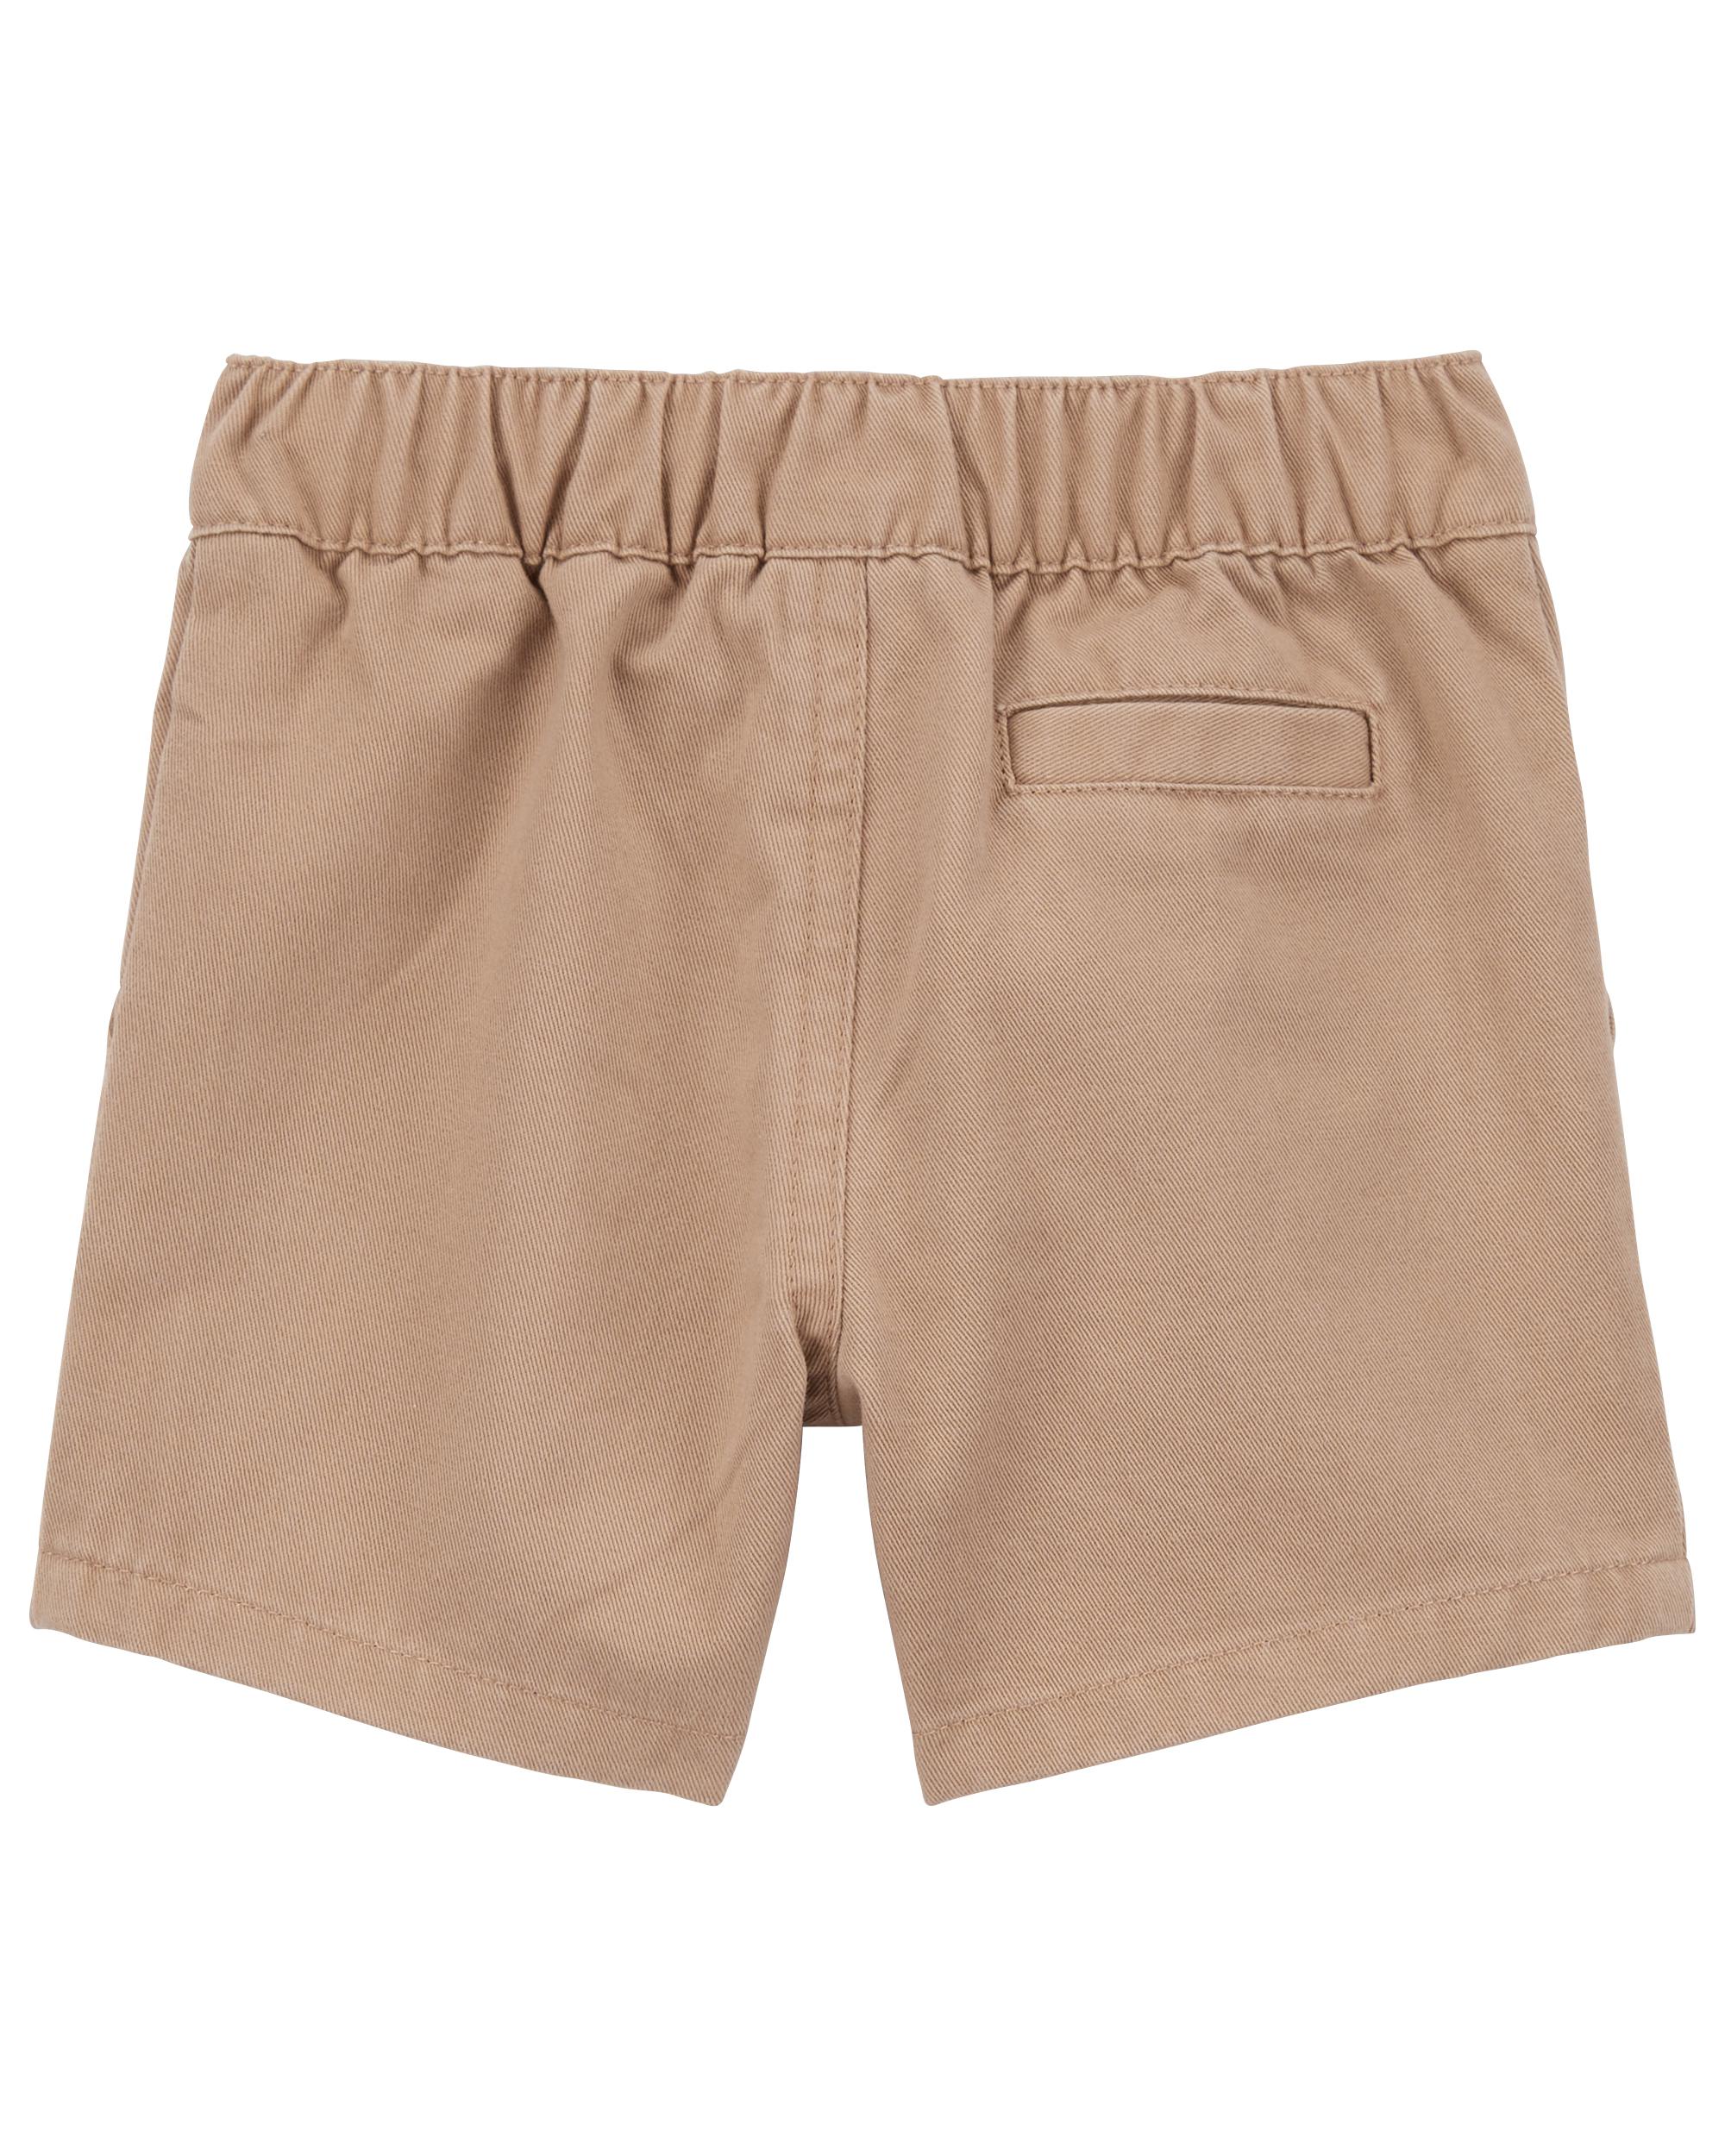 OshKosh Striped Flat Front Shorts sz 3T – Me 'n Mommy To Be